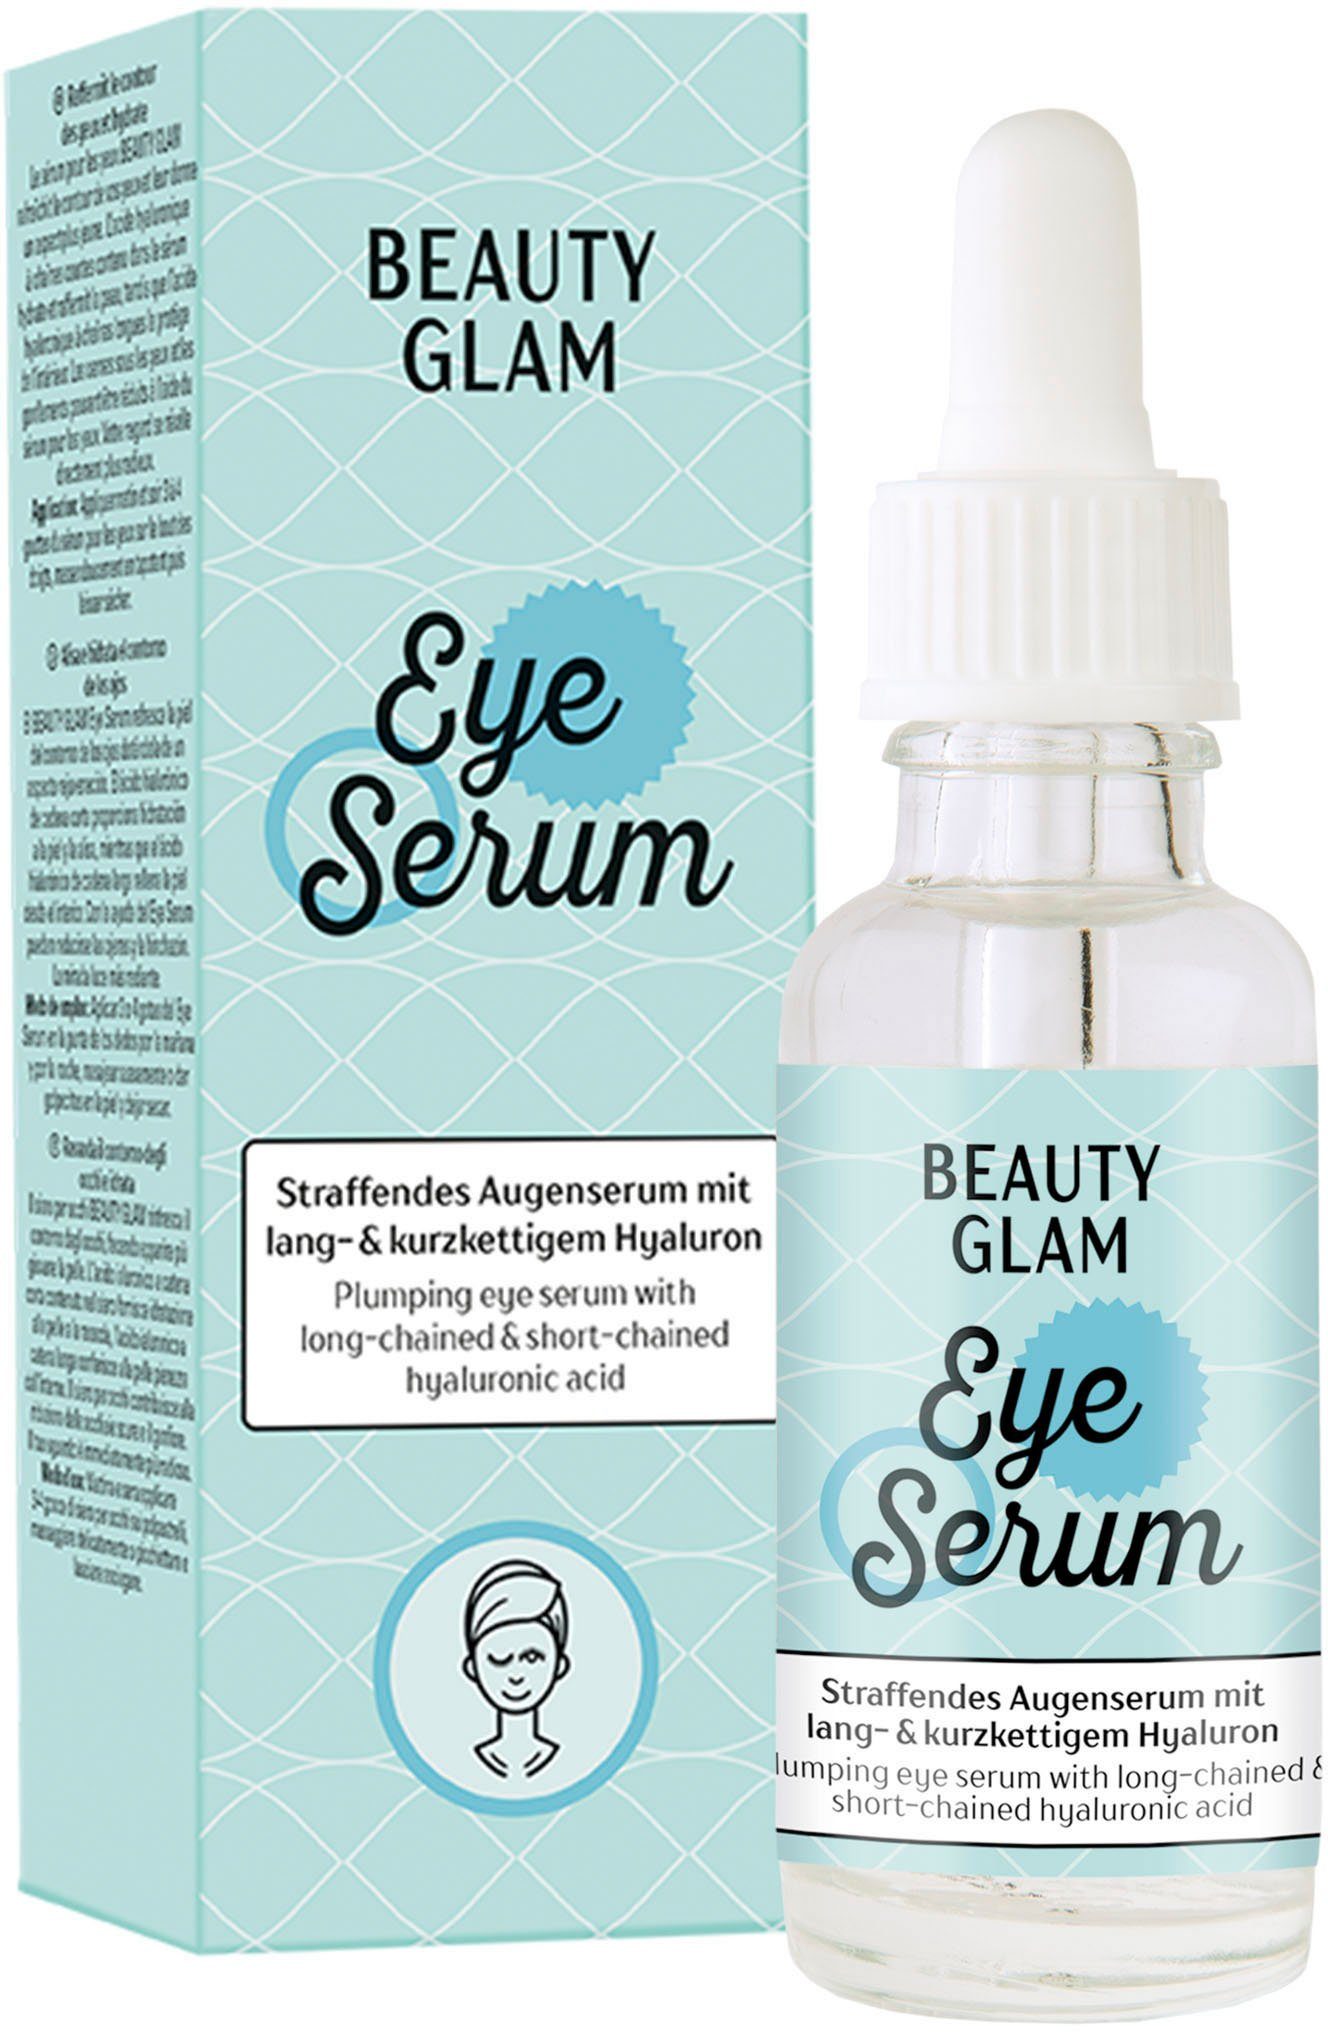 Serum Beauty Glam GLAM Eye BEAUTY Augenserum